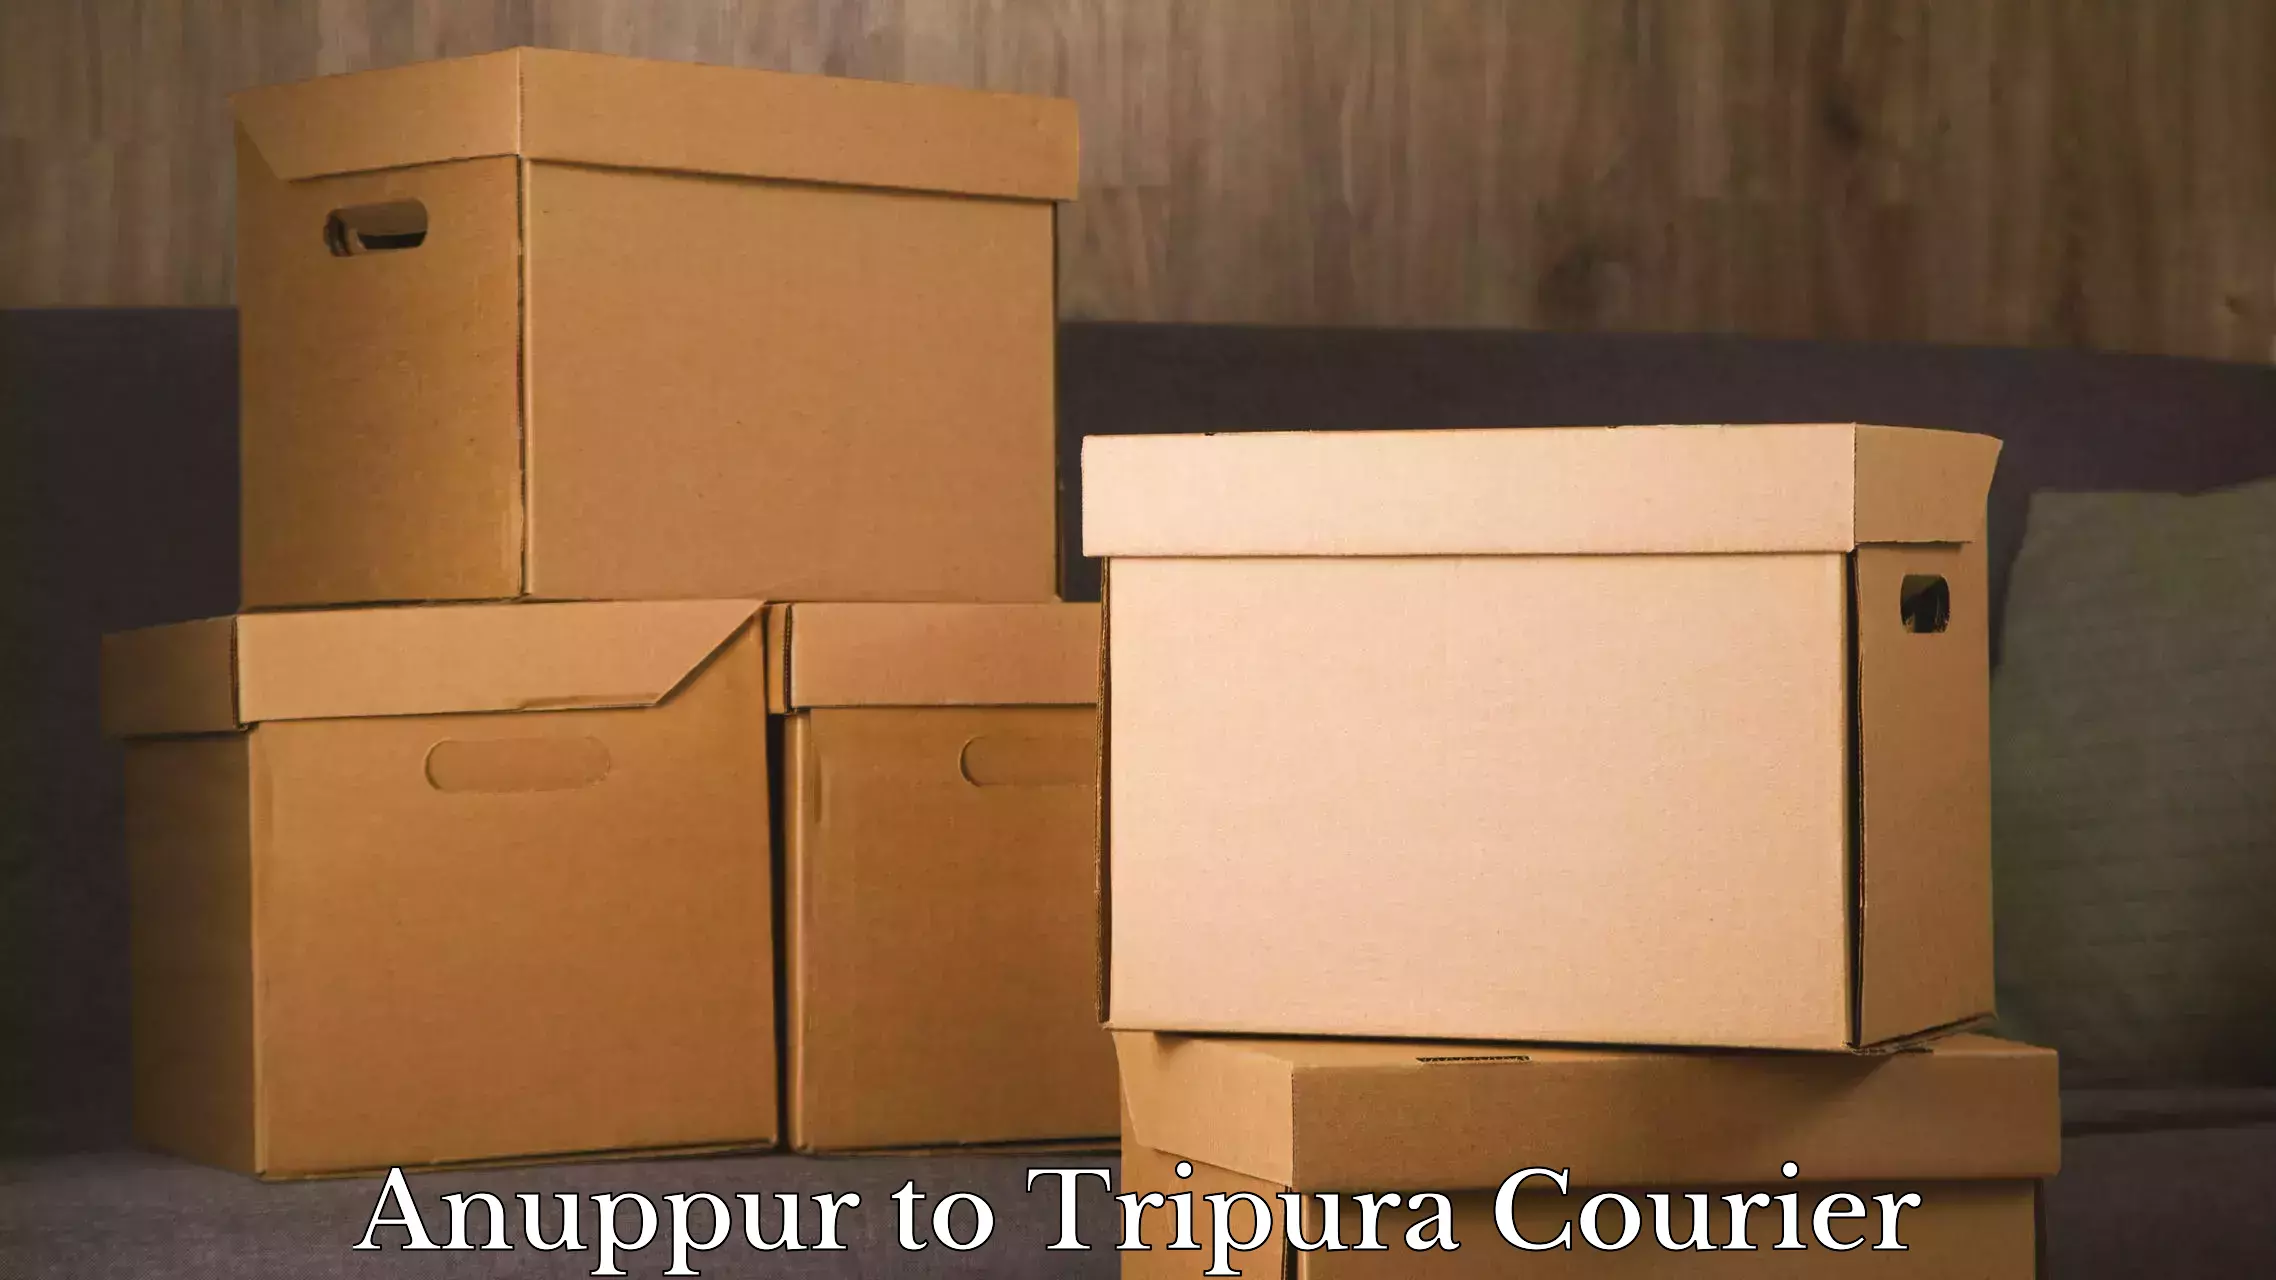 Emergency baggage service Anuppur to Udaipur Tripura